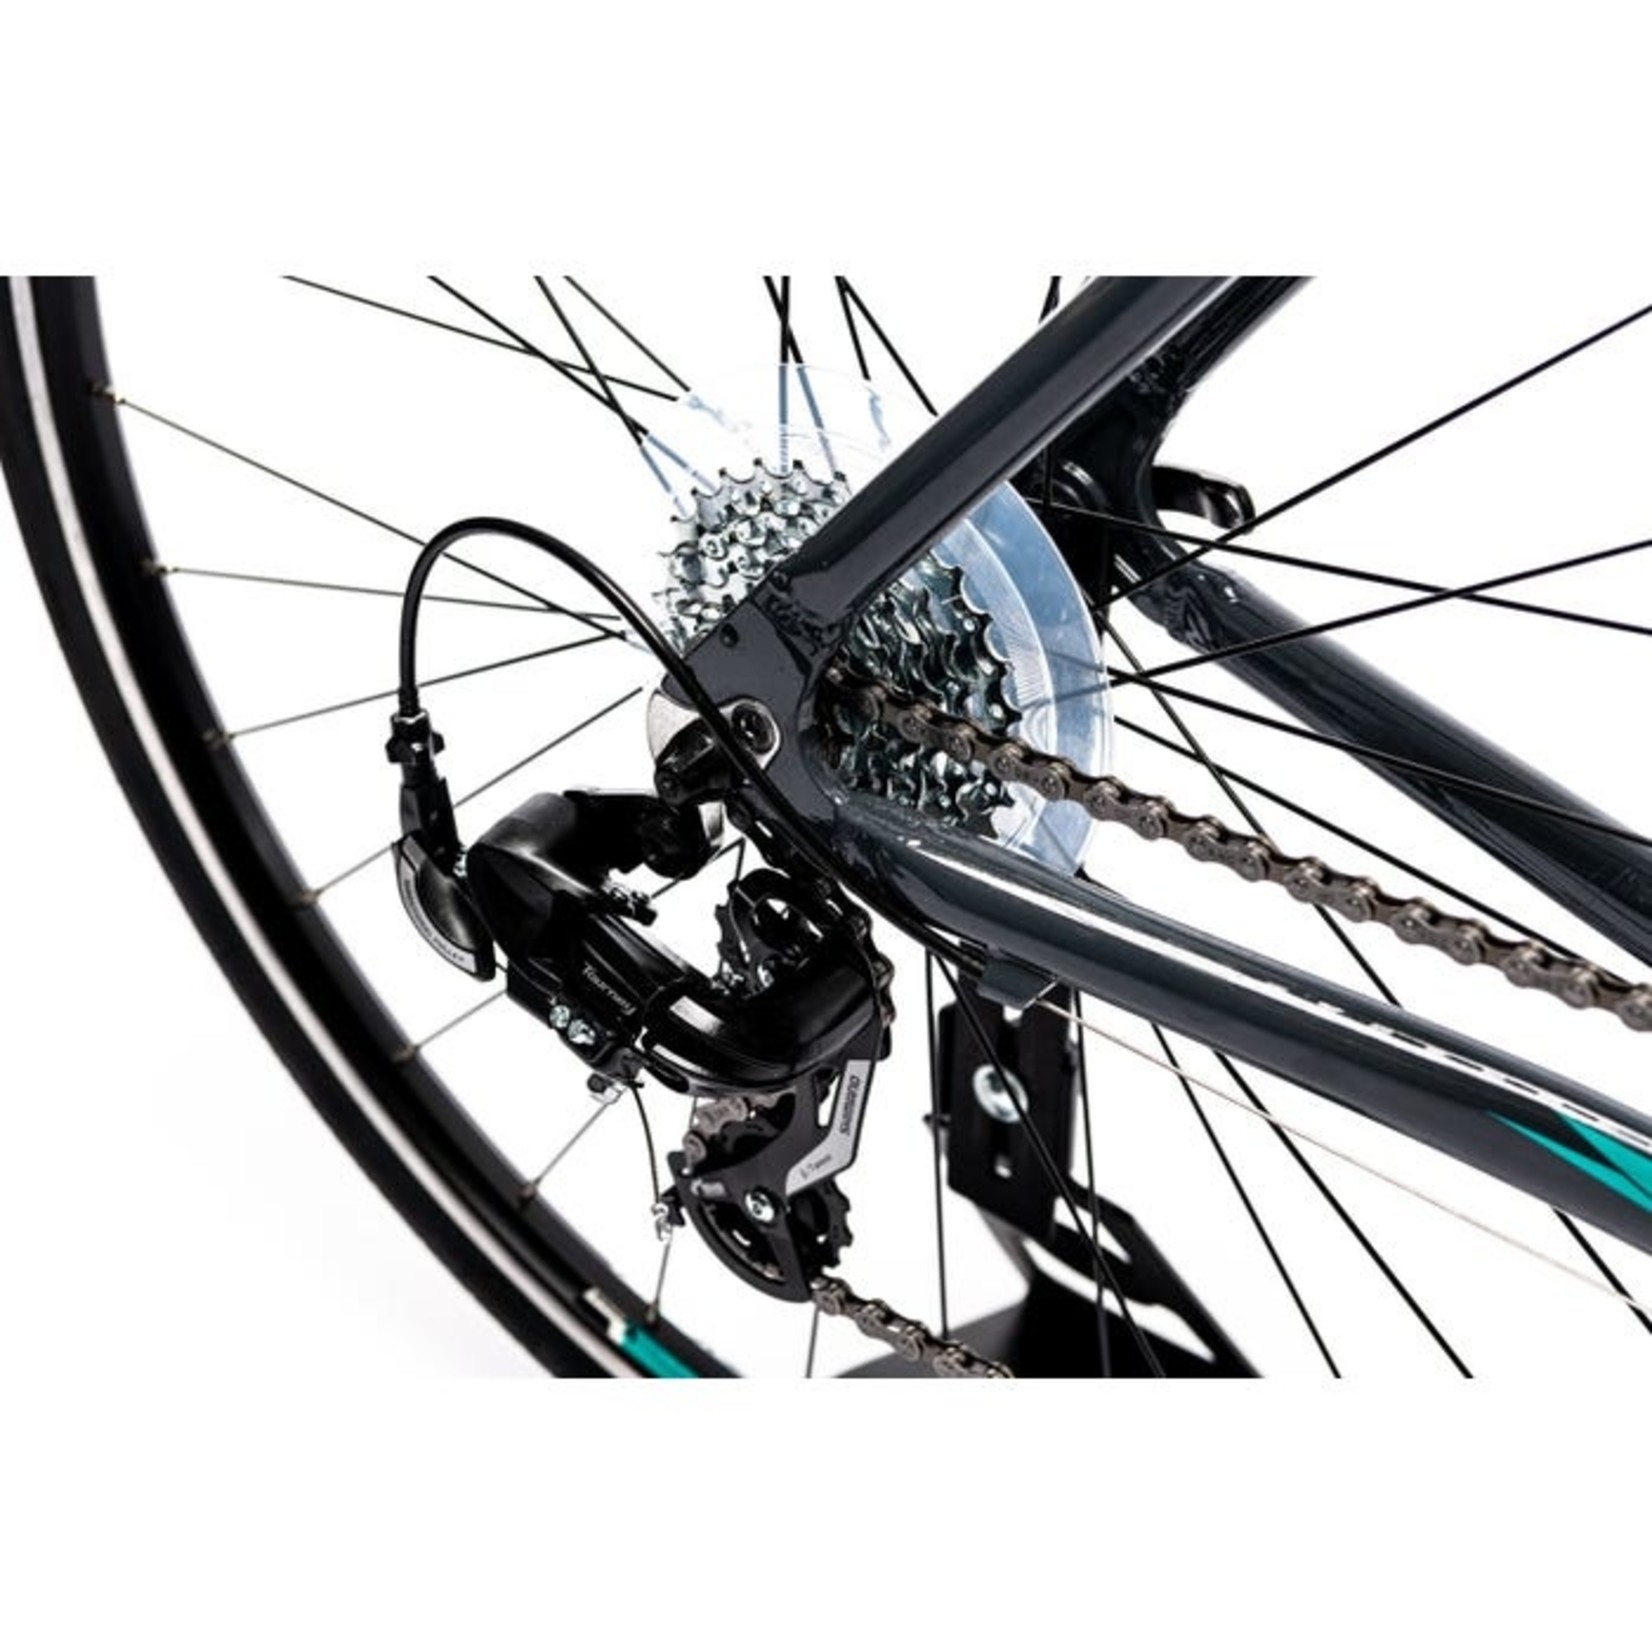 Merida Merida 2021 Speeder 10 V Women's Road Bike - Glossy Grey(Black/Teal) - Xsmall